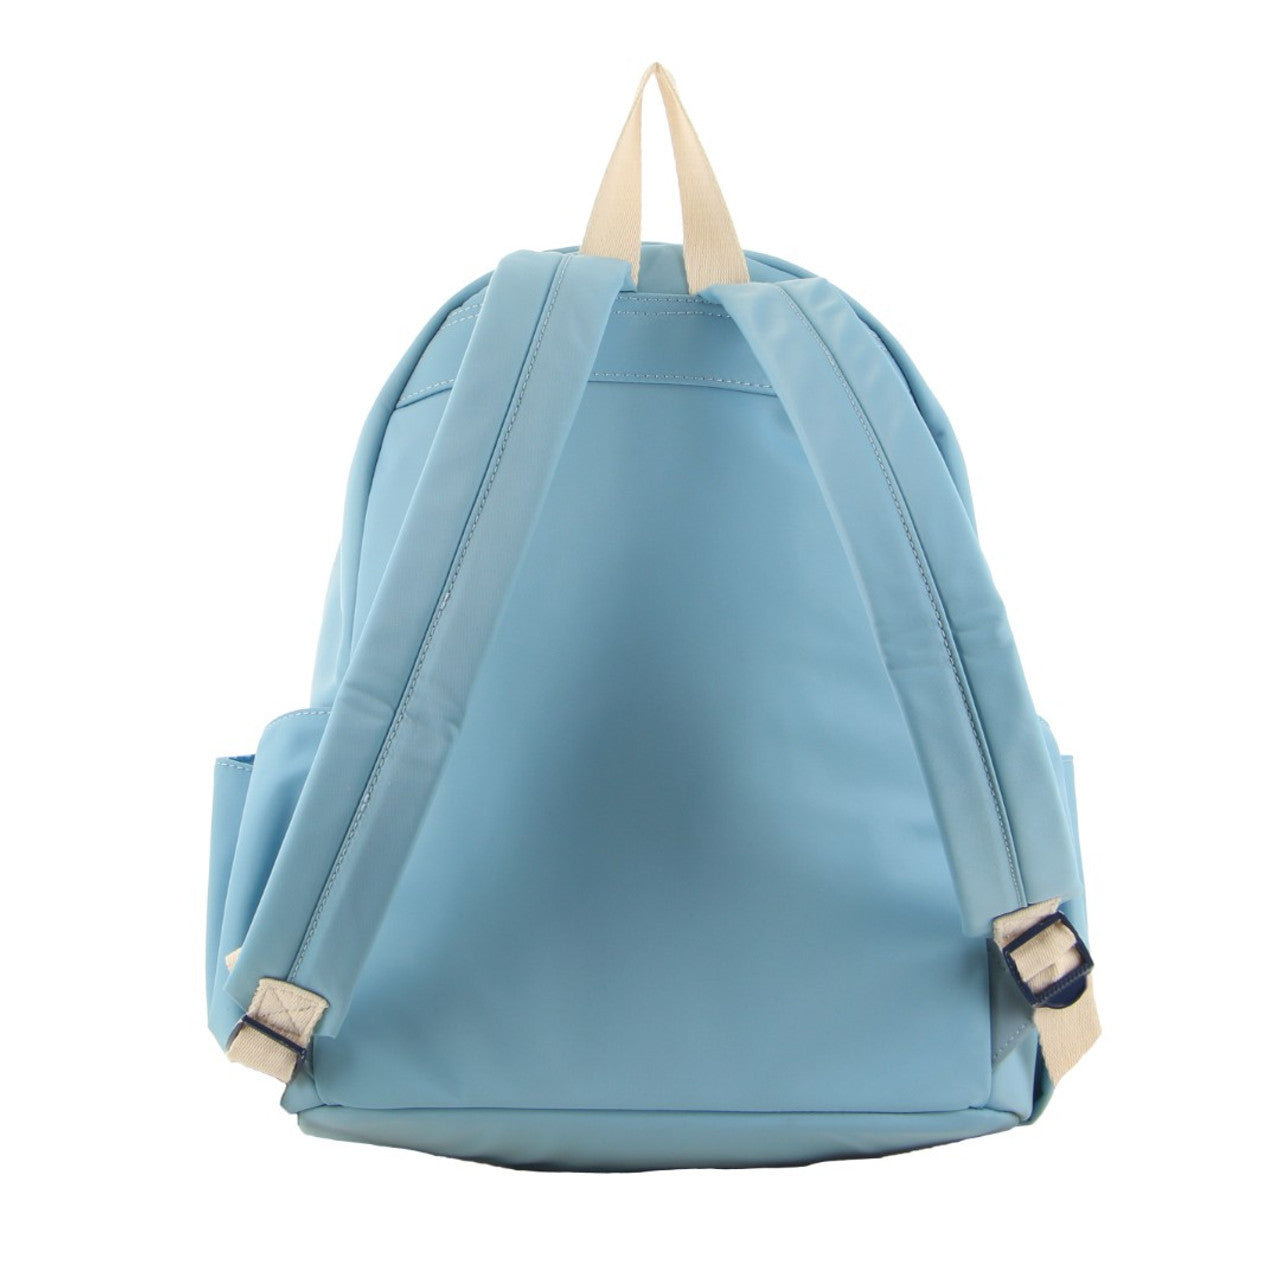 GAP - 11 Nylon Backpack front pocket - Light Blue-3